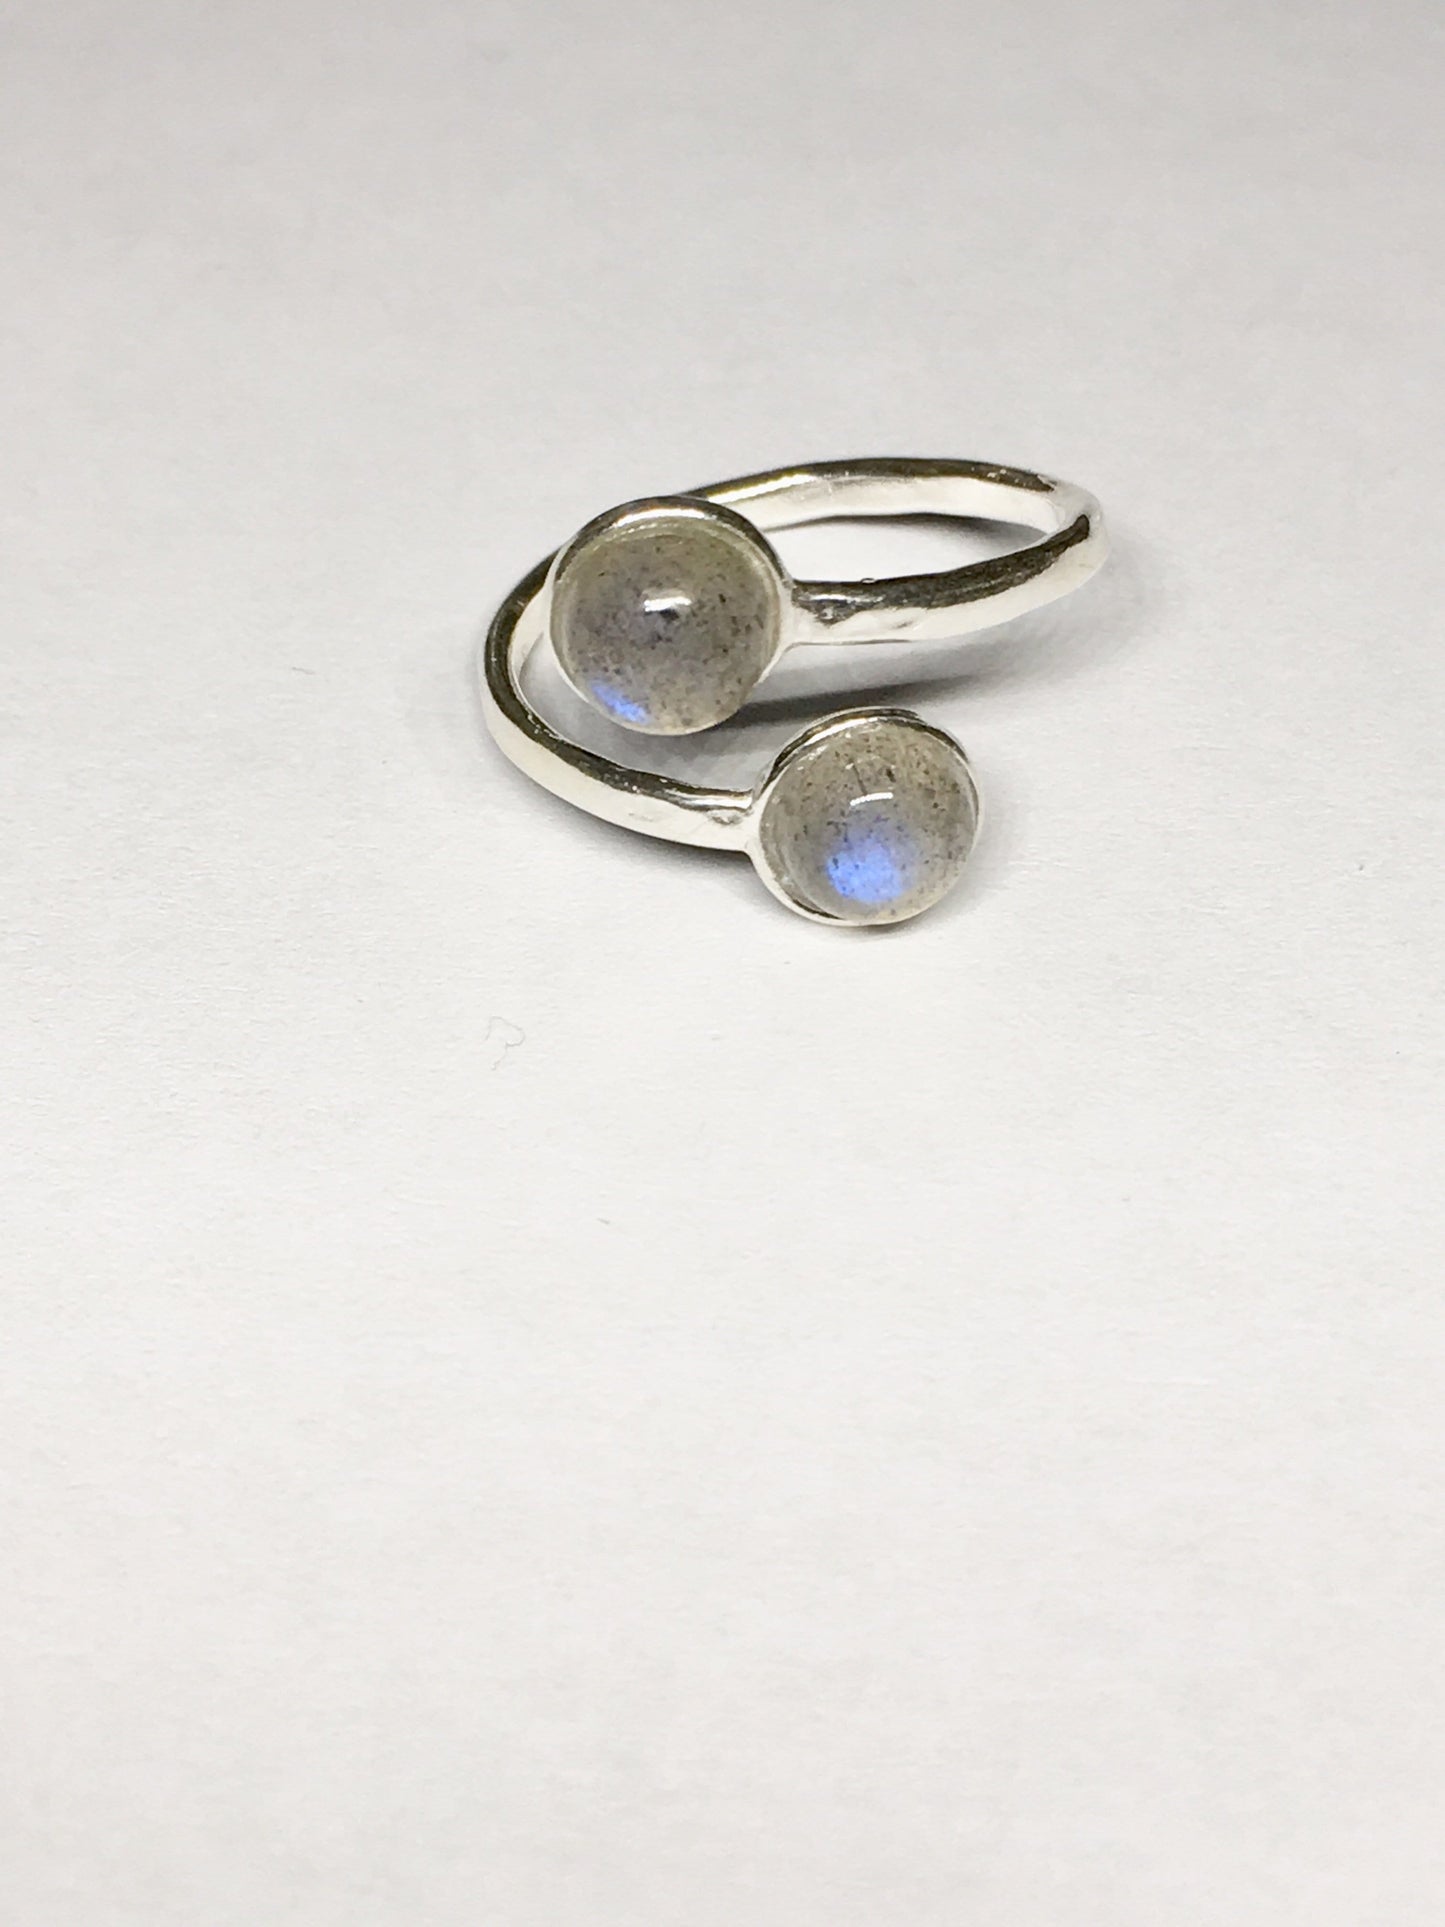 Handmade Labradorite Gemstone And Sterling Silver Ring Gemstone Ring